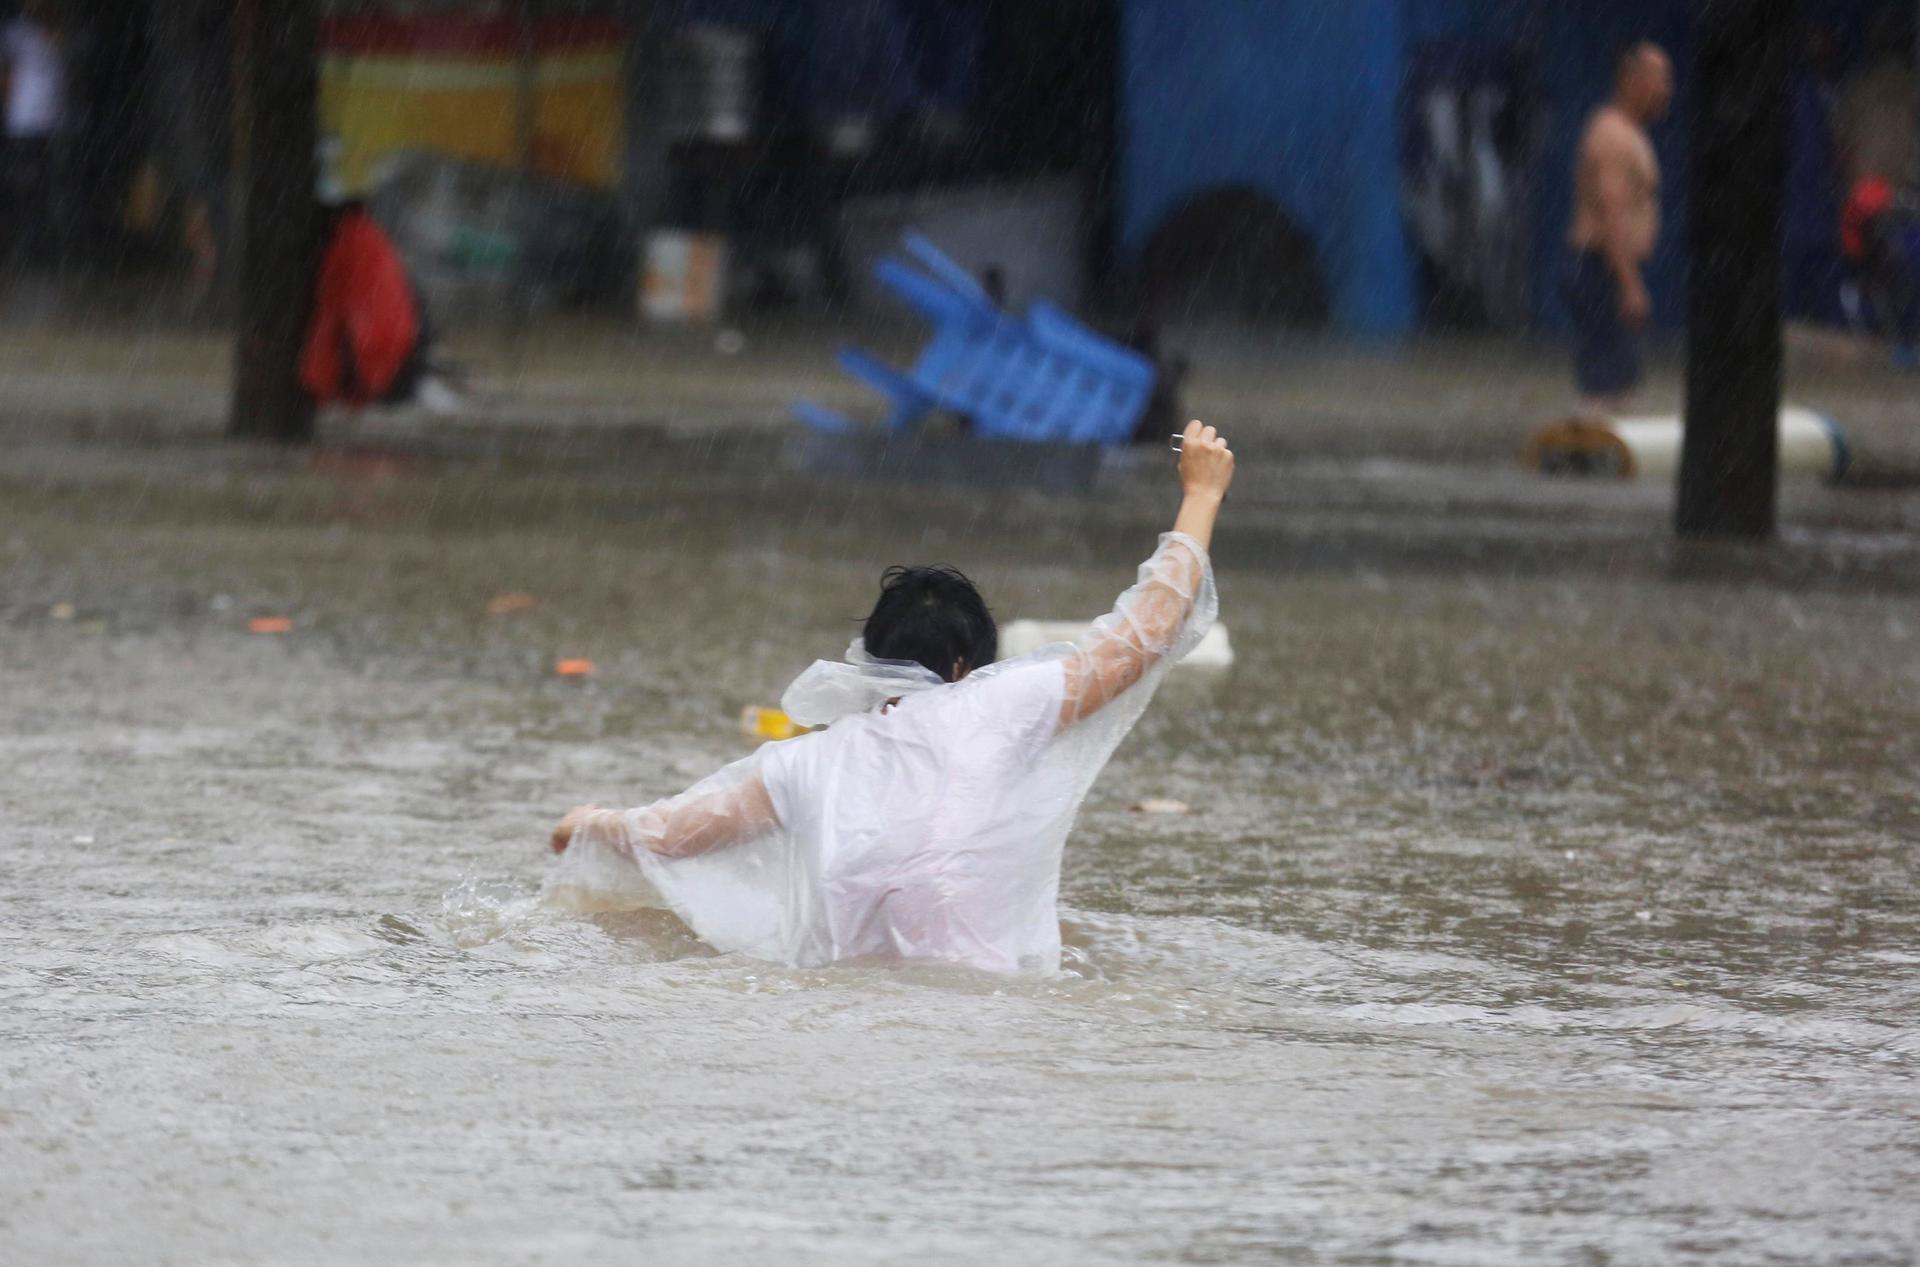 A pedestrian wades through waist-high floodwaters in a white poncho